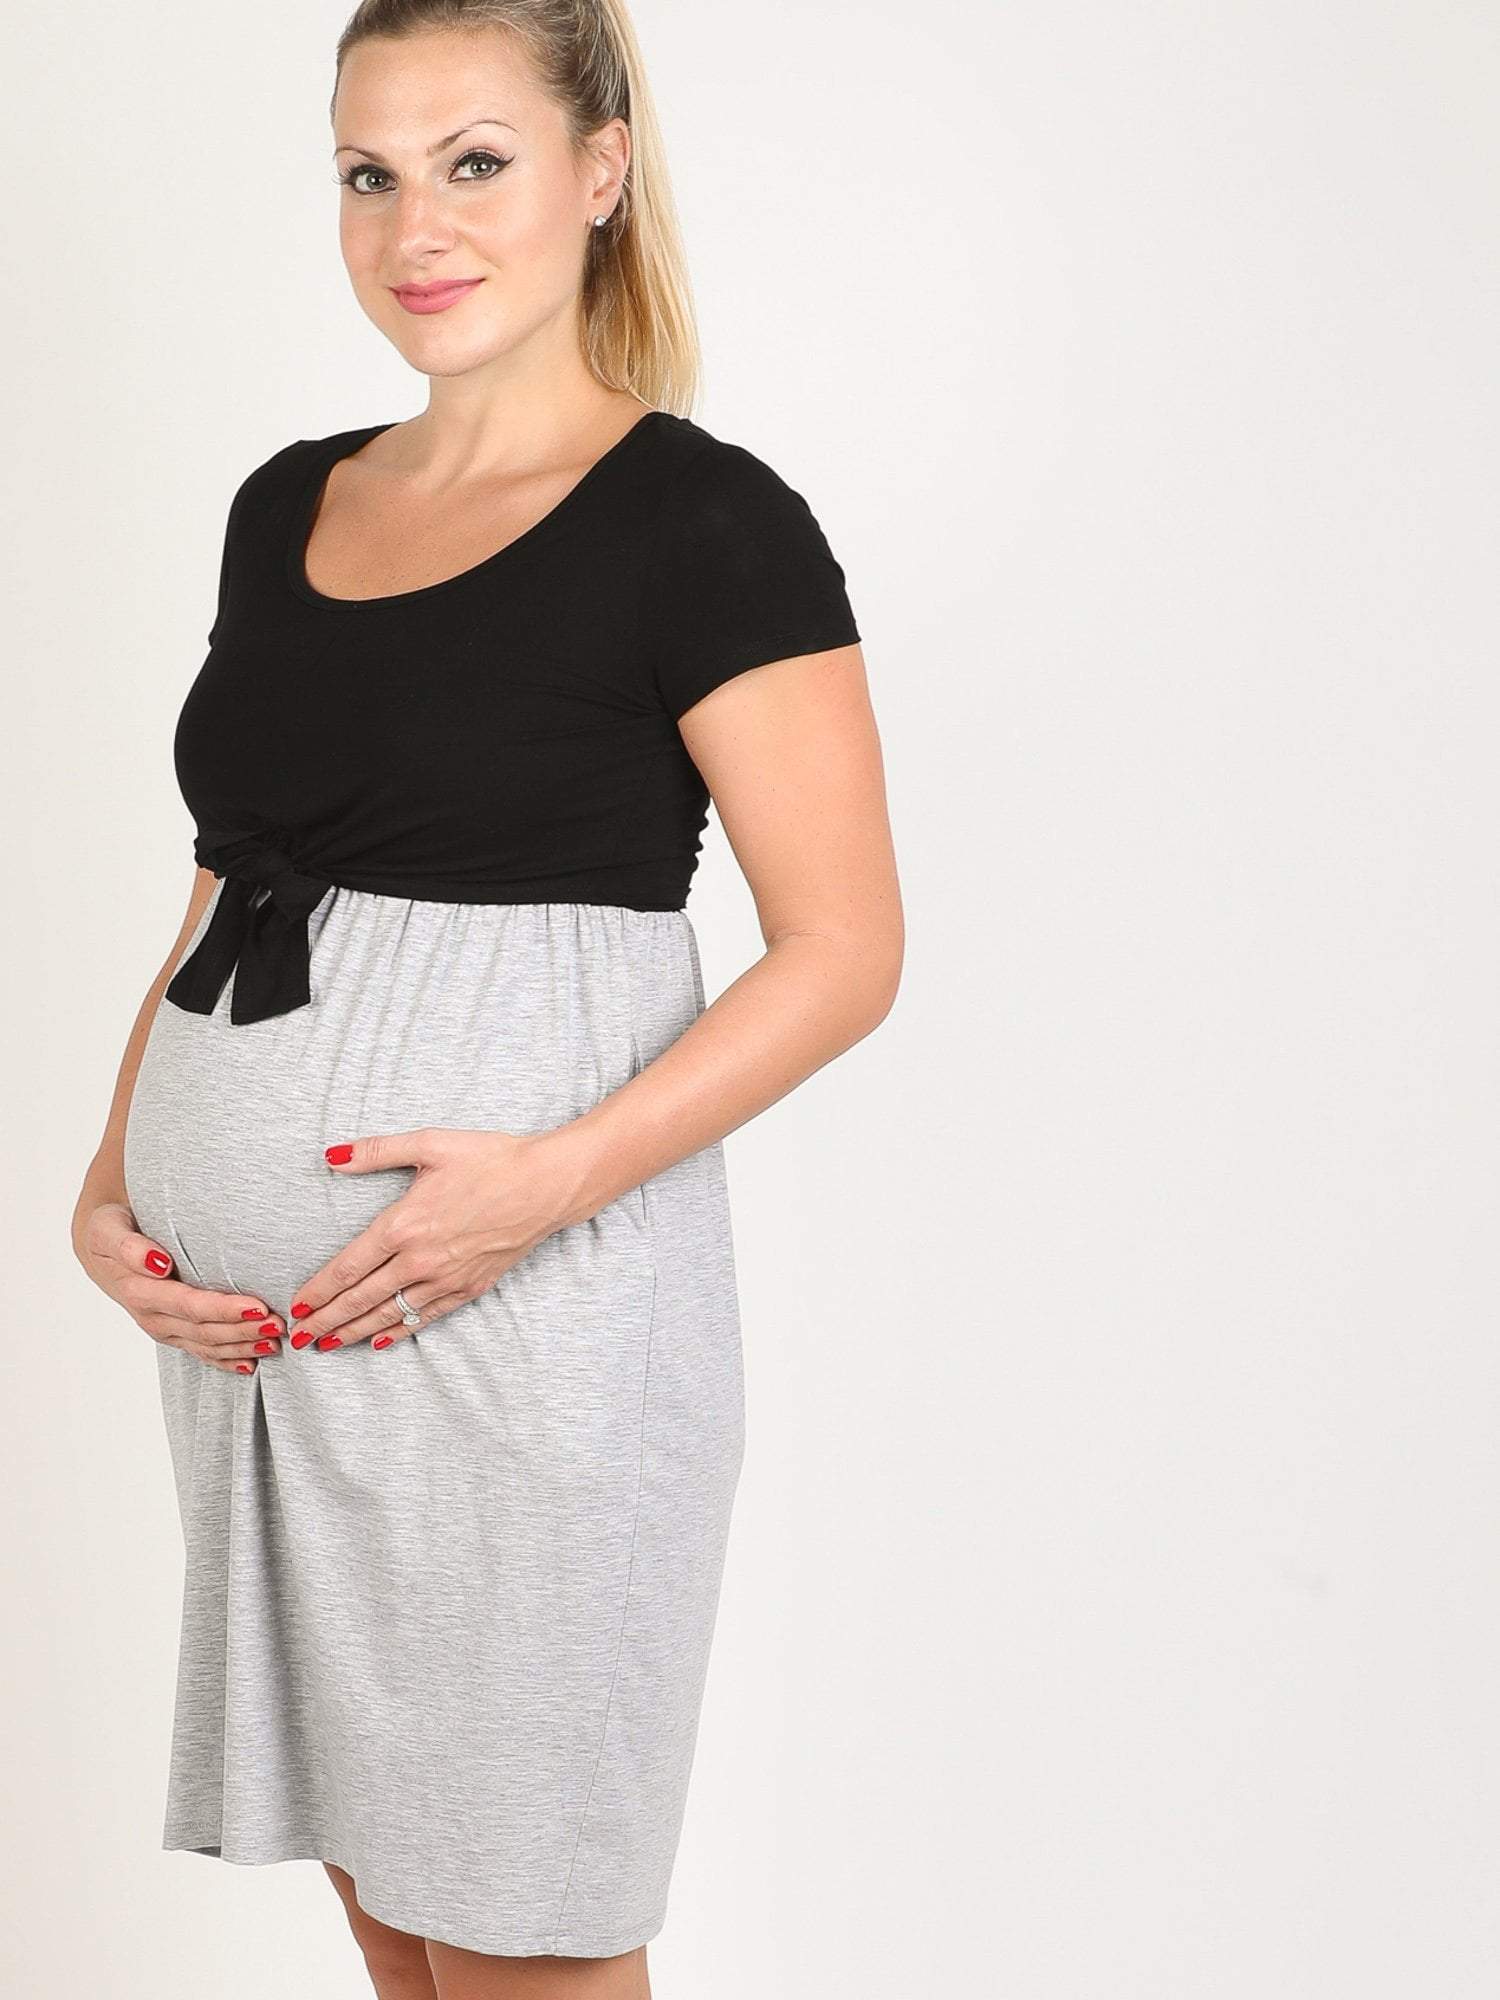 pregnancy dress online shopping